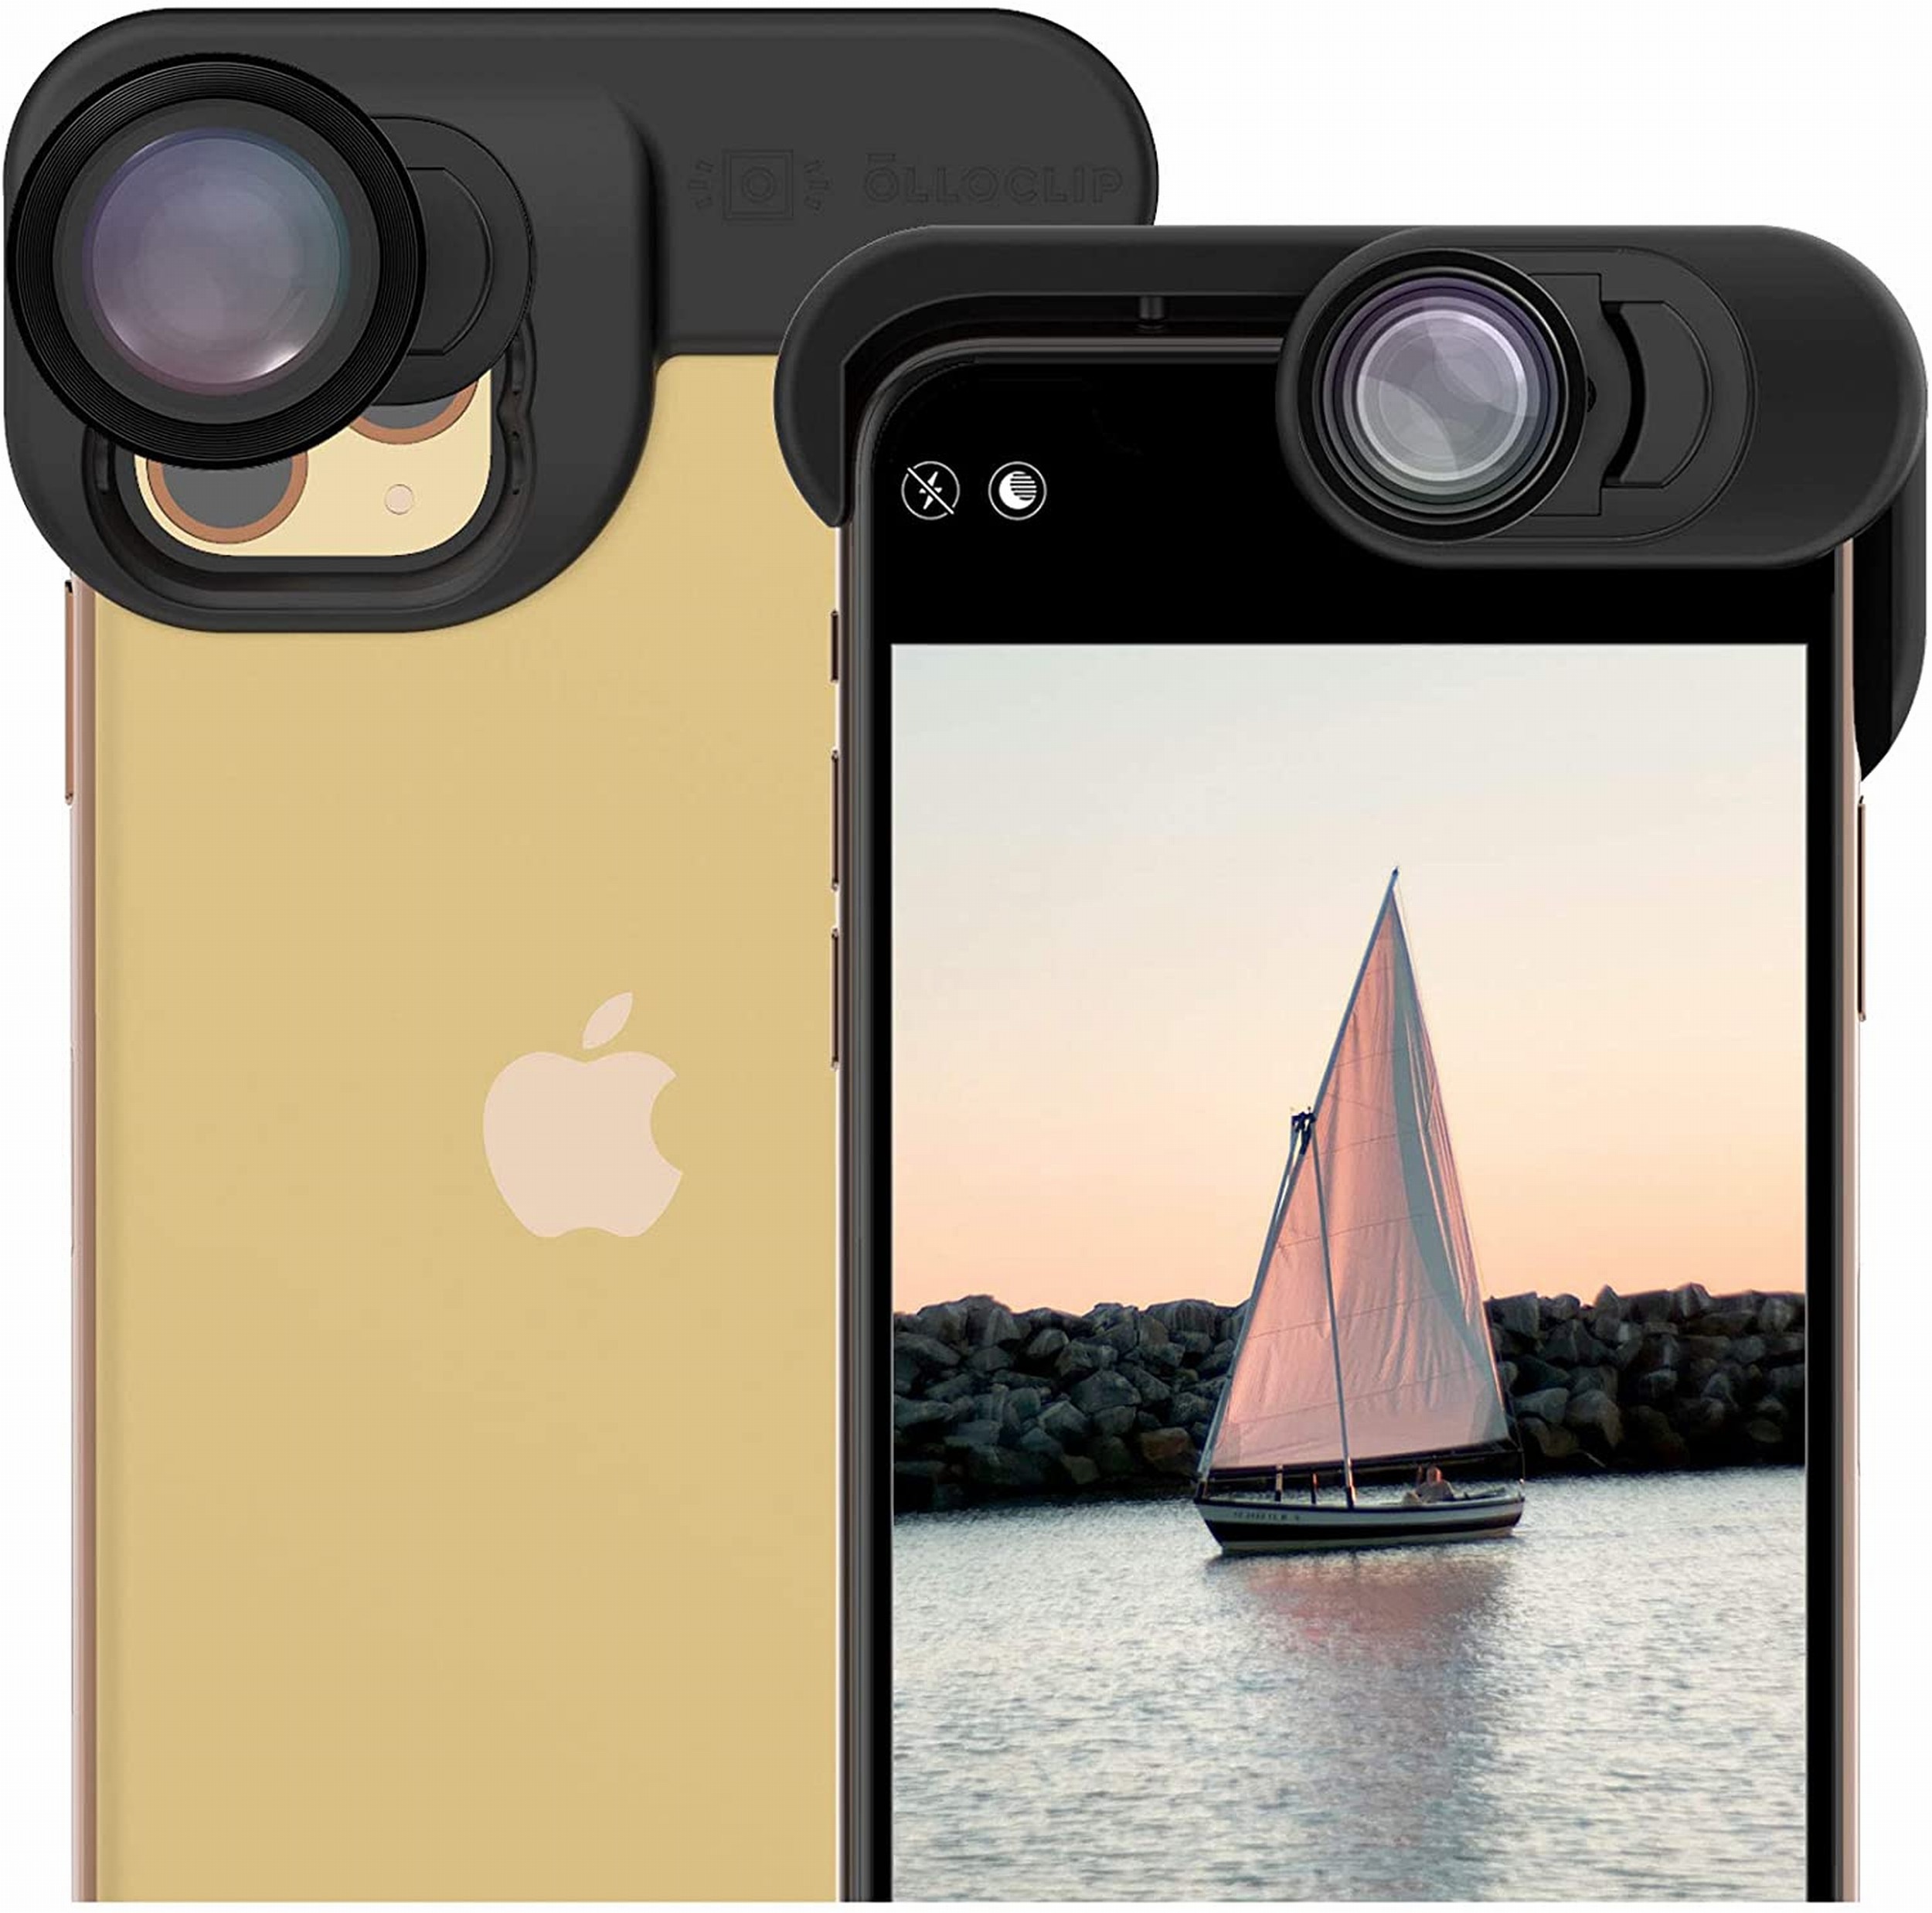 12 x Olloclip OC-0000382-EU iPhone 11 Pro Max Elite Pack Lens Pocket Pro Fisheye Macro 15X